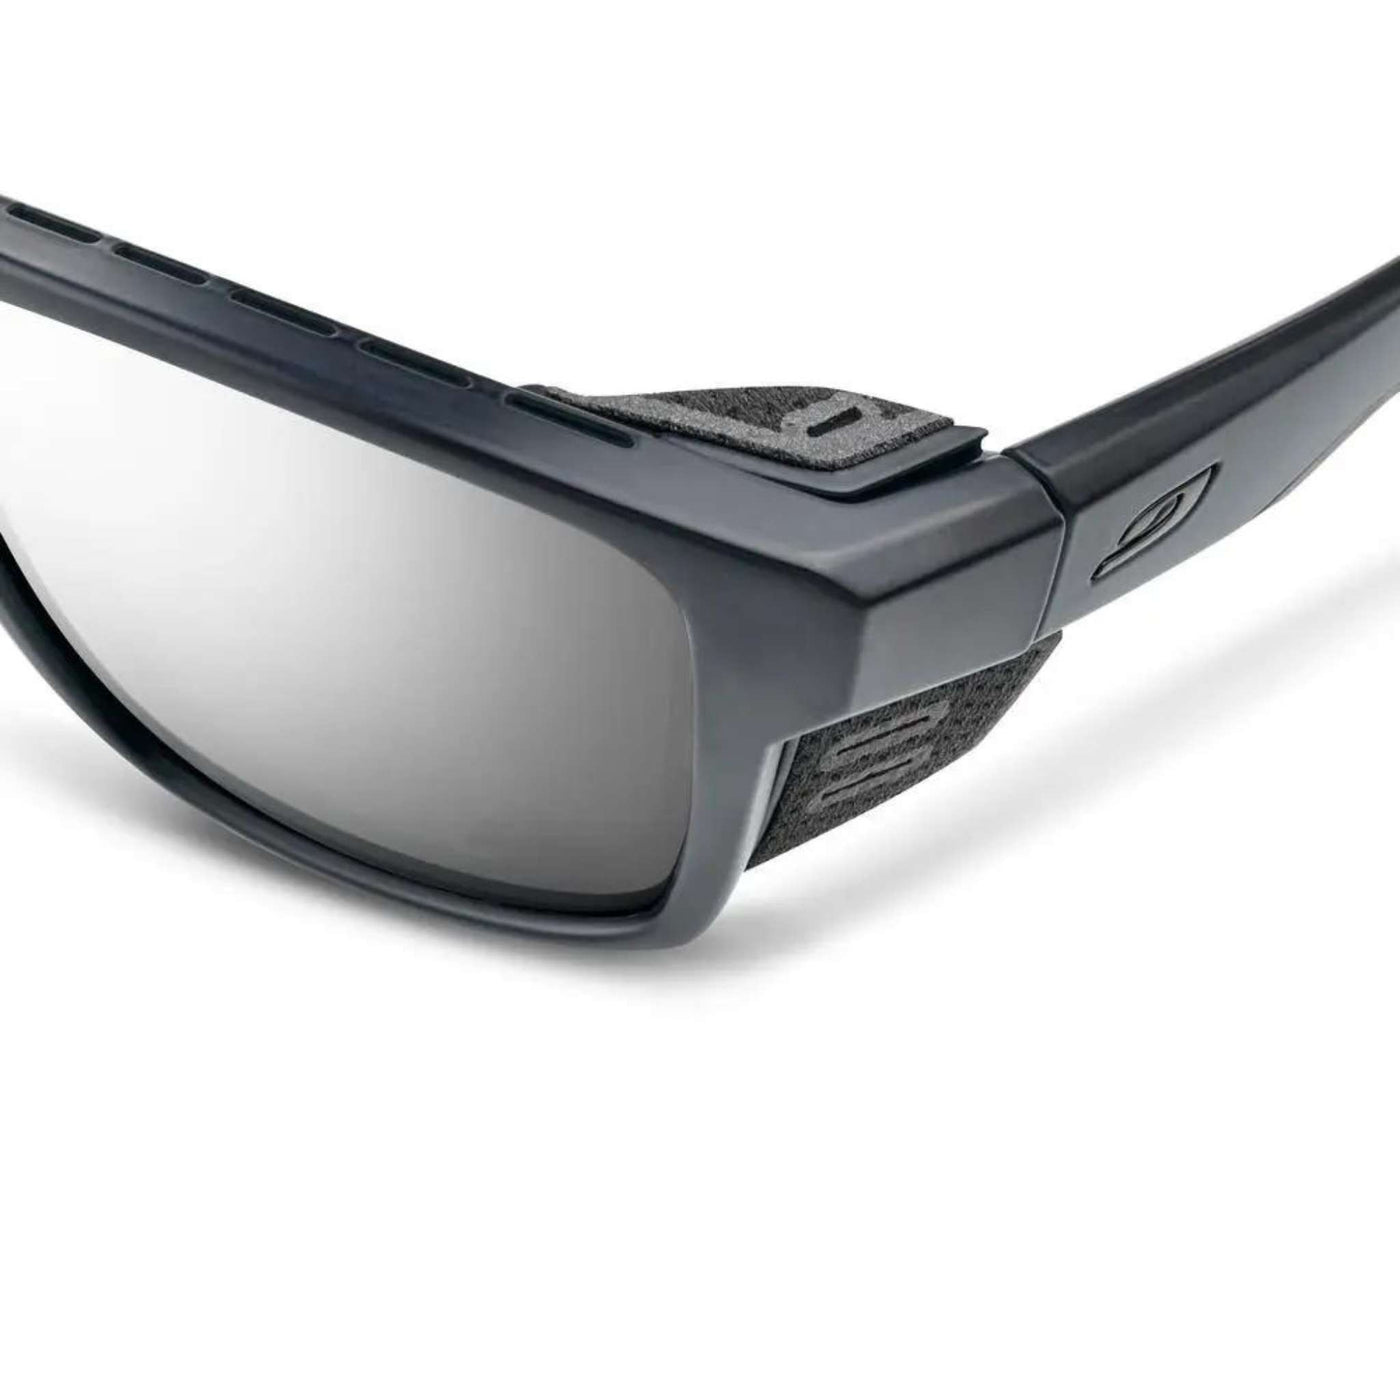 Julbo Shield M Black Translucent/Ice Blue/Pink Sunglasses - Spectron 4 Lens | Performance Sunglasses | Further Faster Christchurch NZ